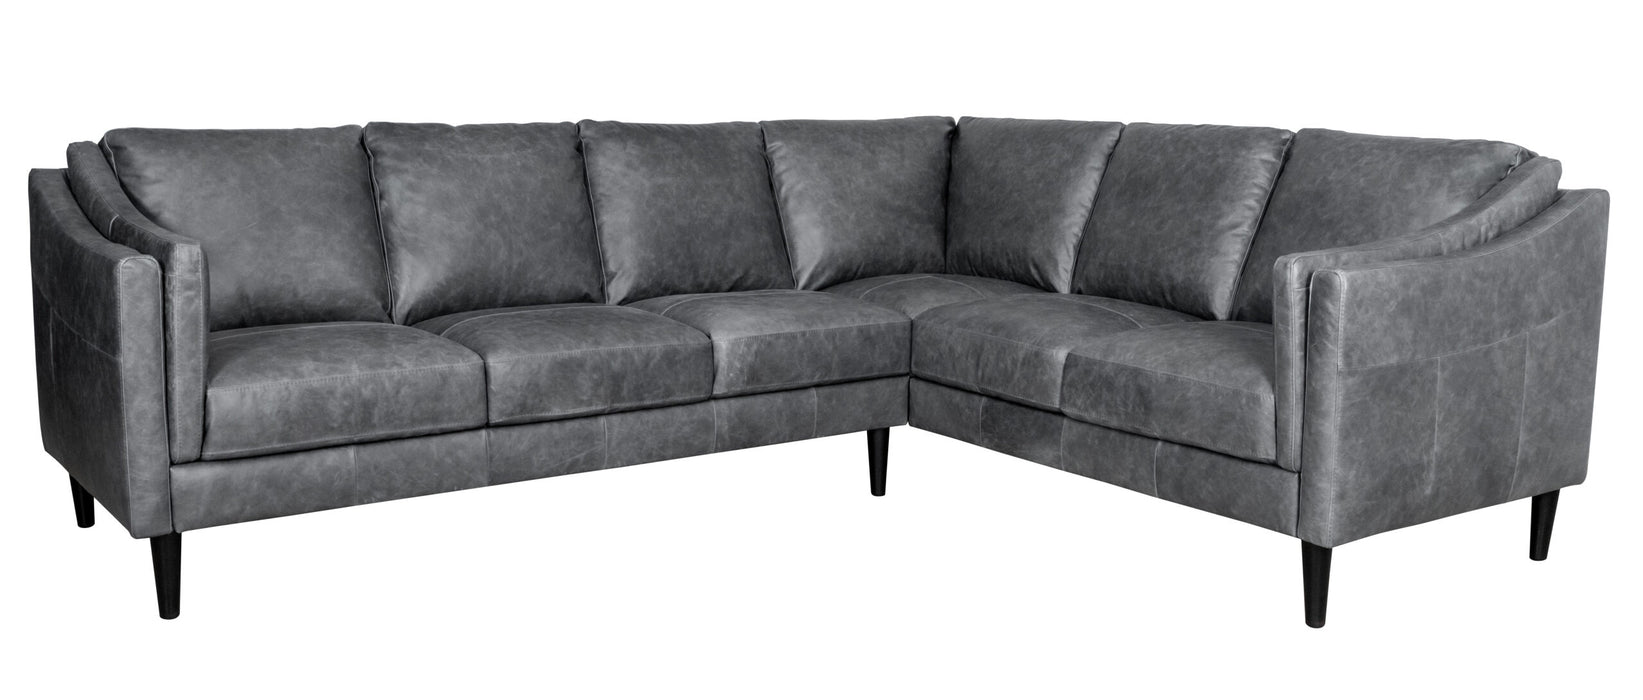 Mariano Italian Leather Furniture - Ava Italian Leather Bomber Gray Sectional - LUK-AVA-SEC-BOMBER GRAY